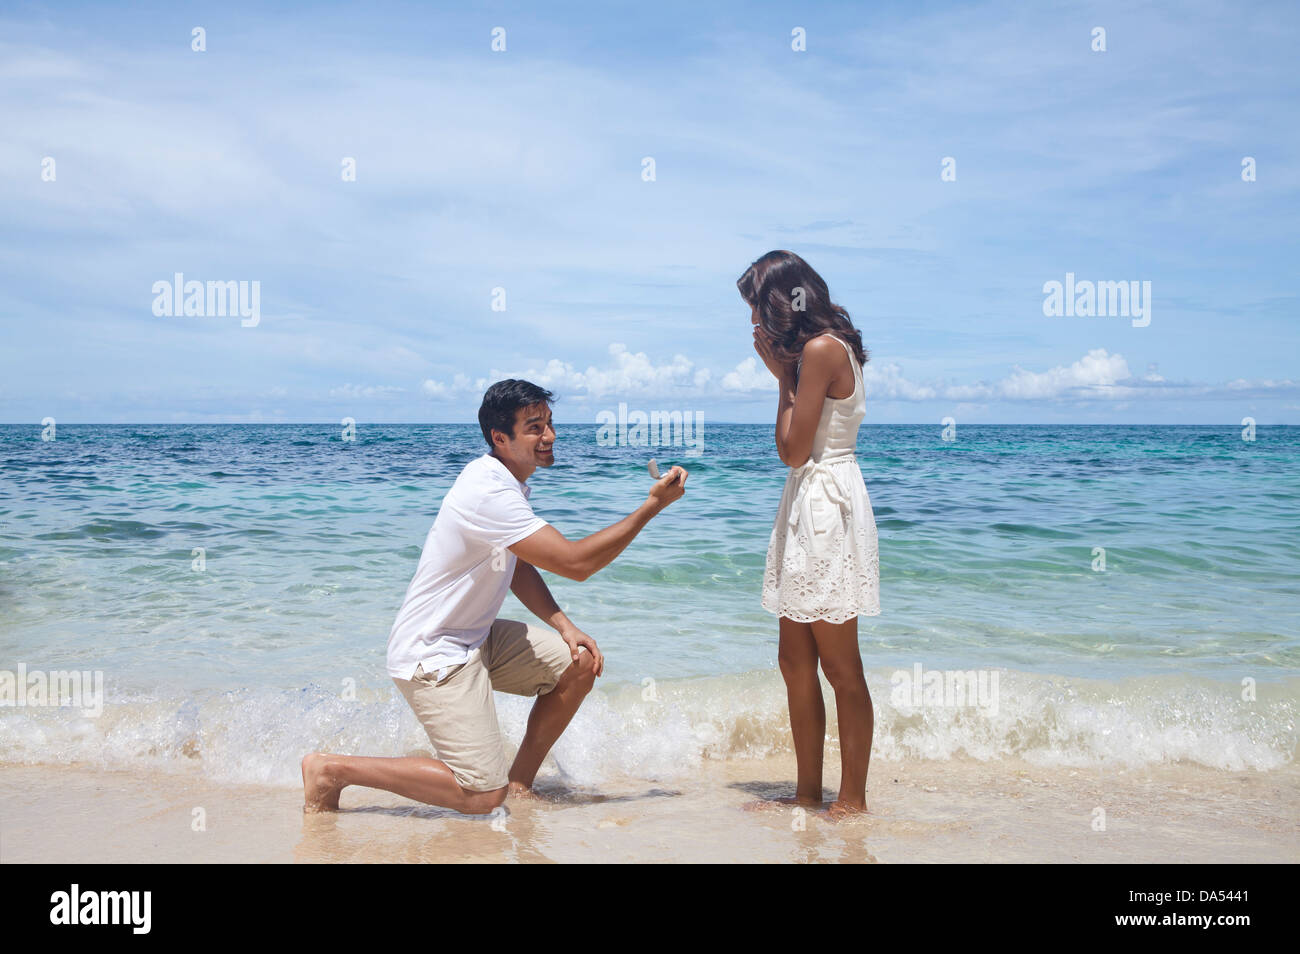 A young couple posing on a beach. Stock Photo